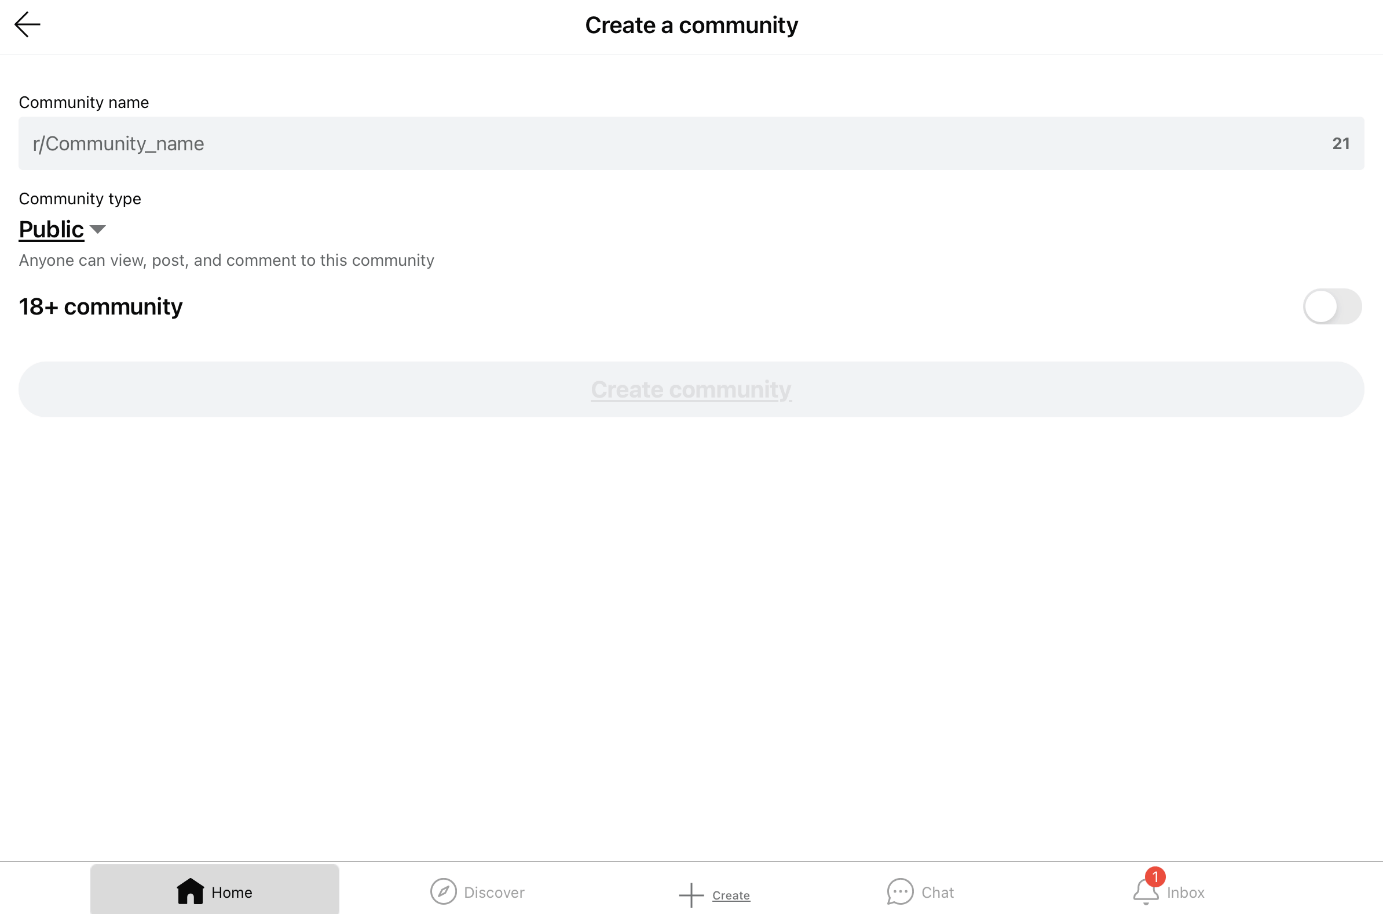 iPad screenshot of the community creation process on Reddit